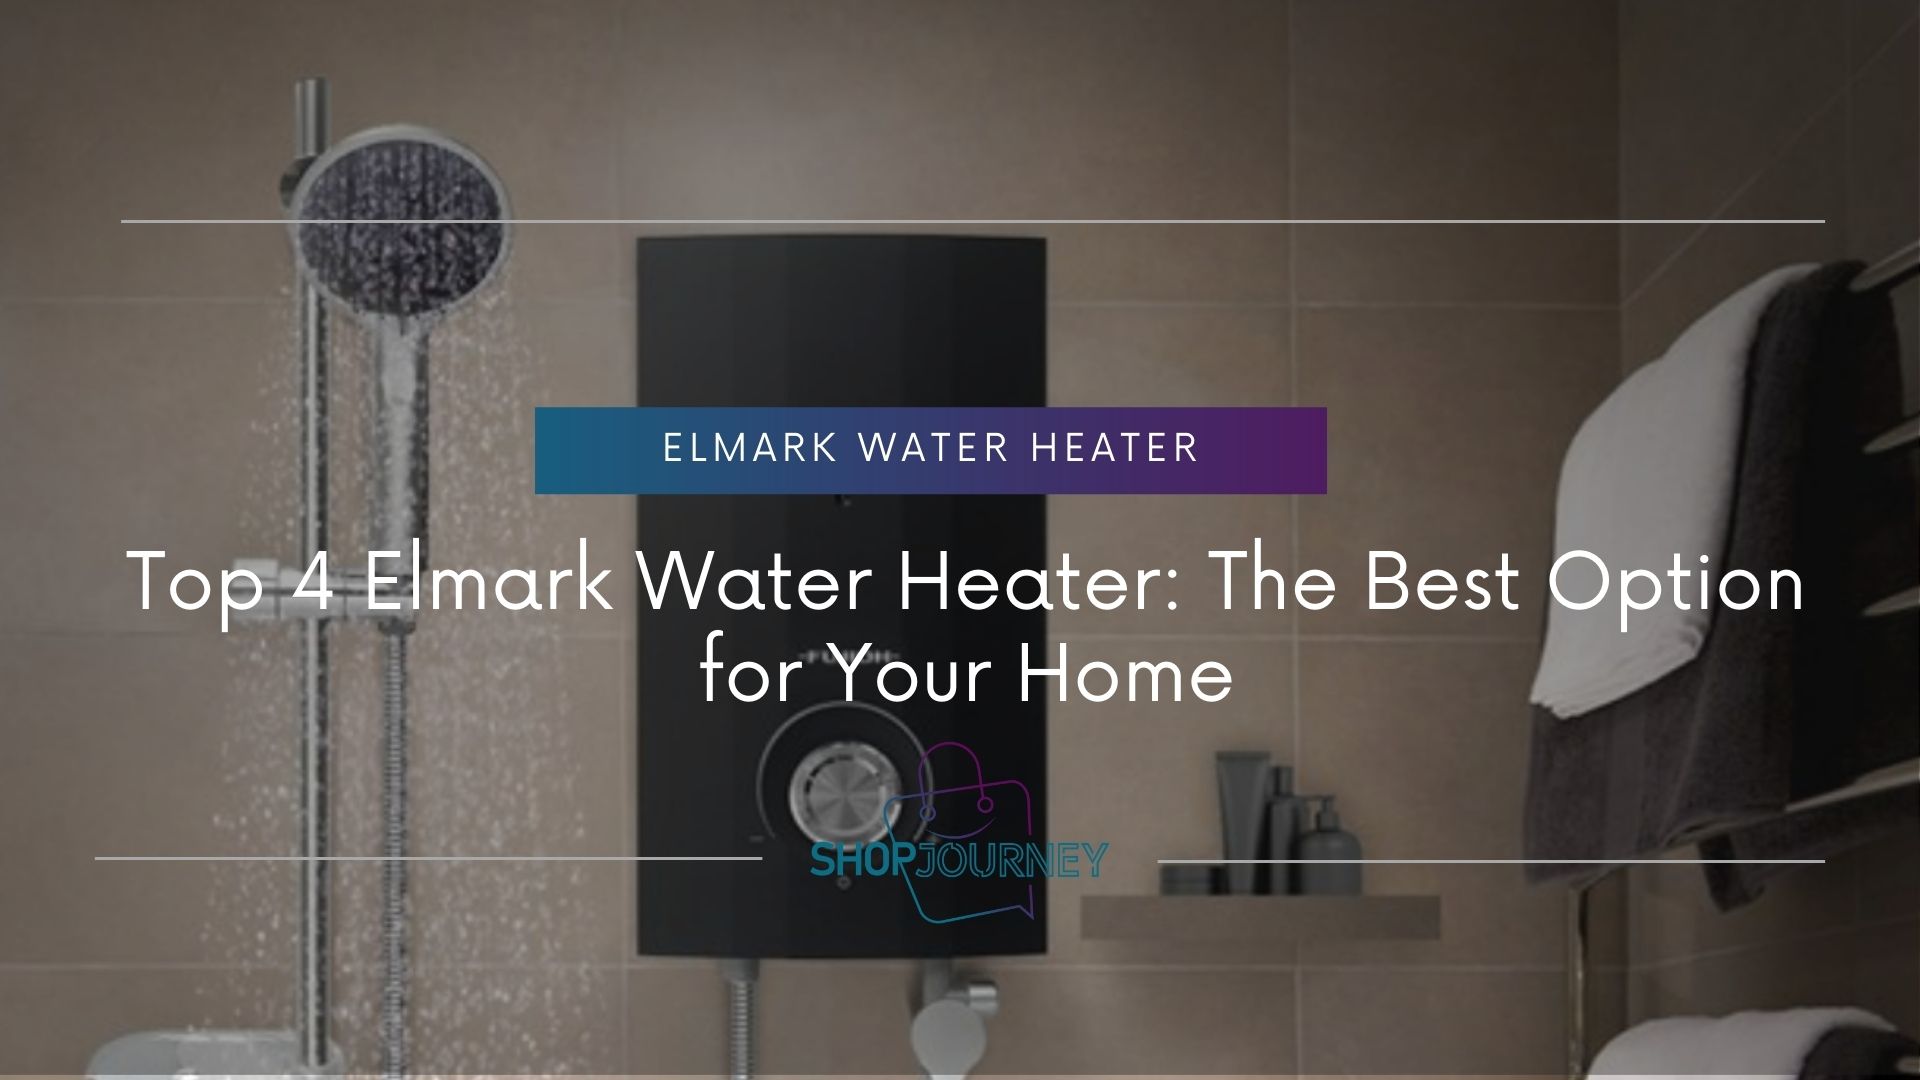 Elmark water heater - shop journey